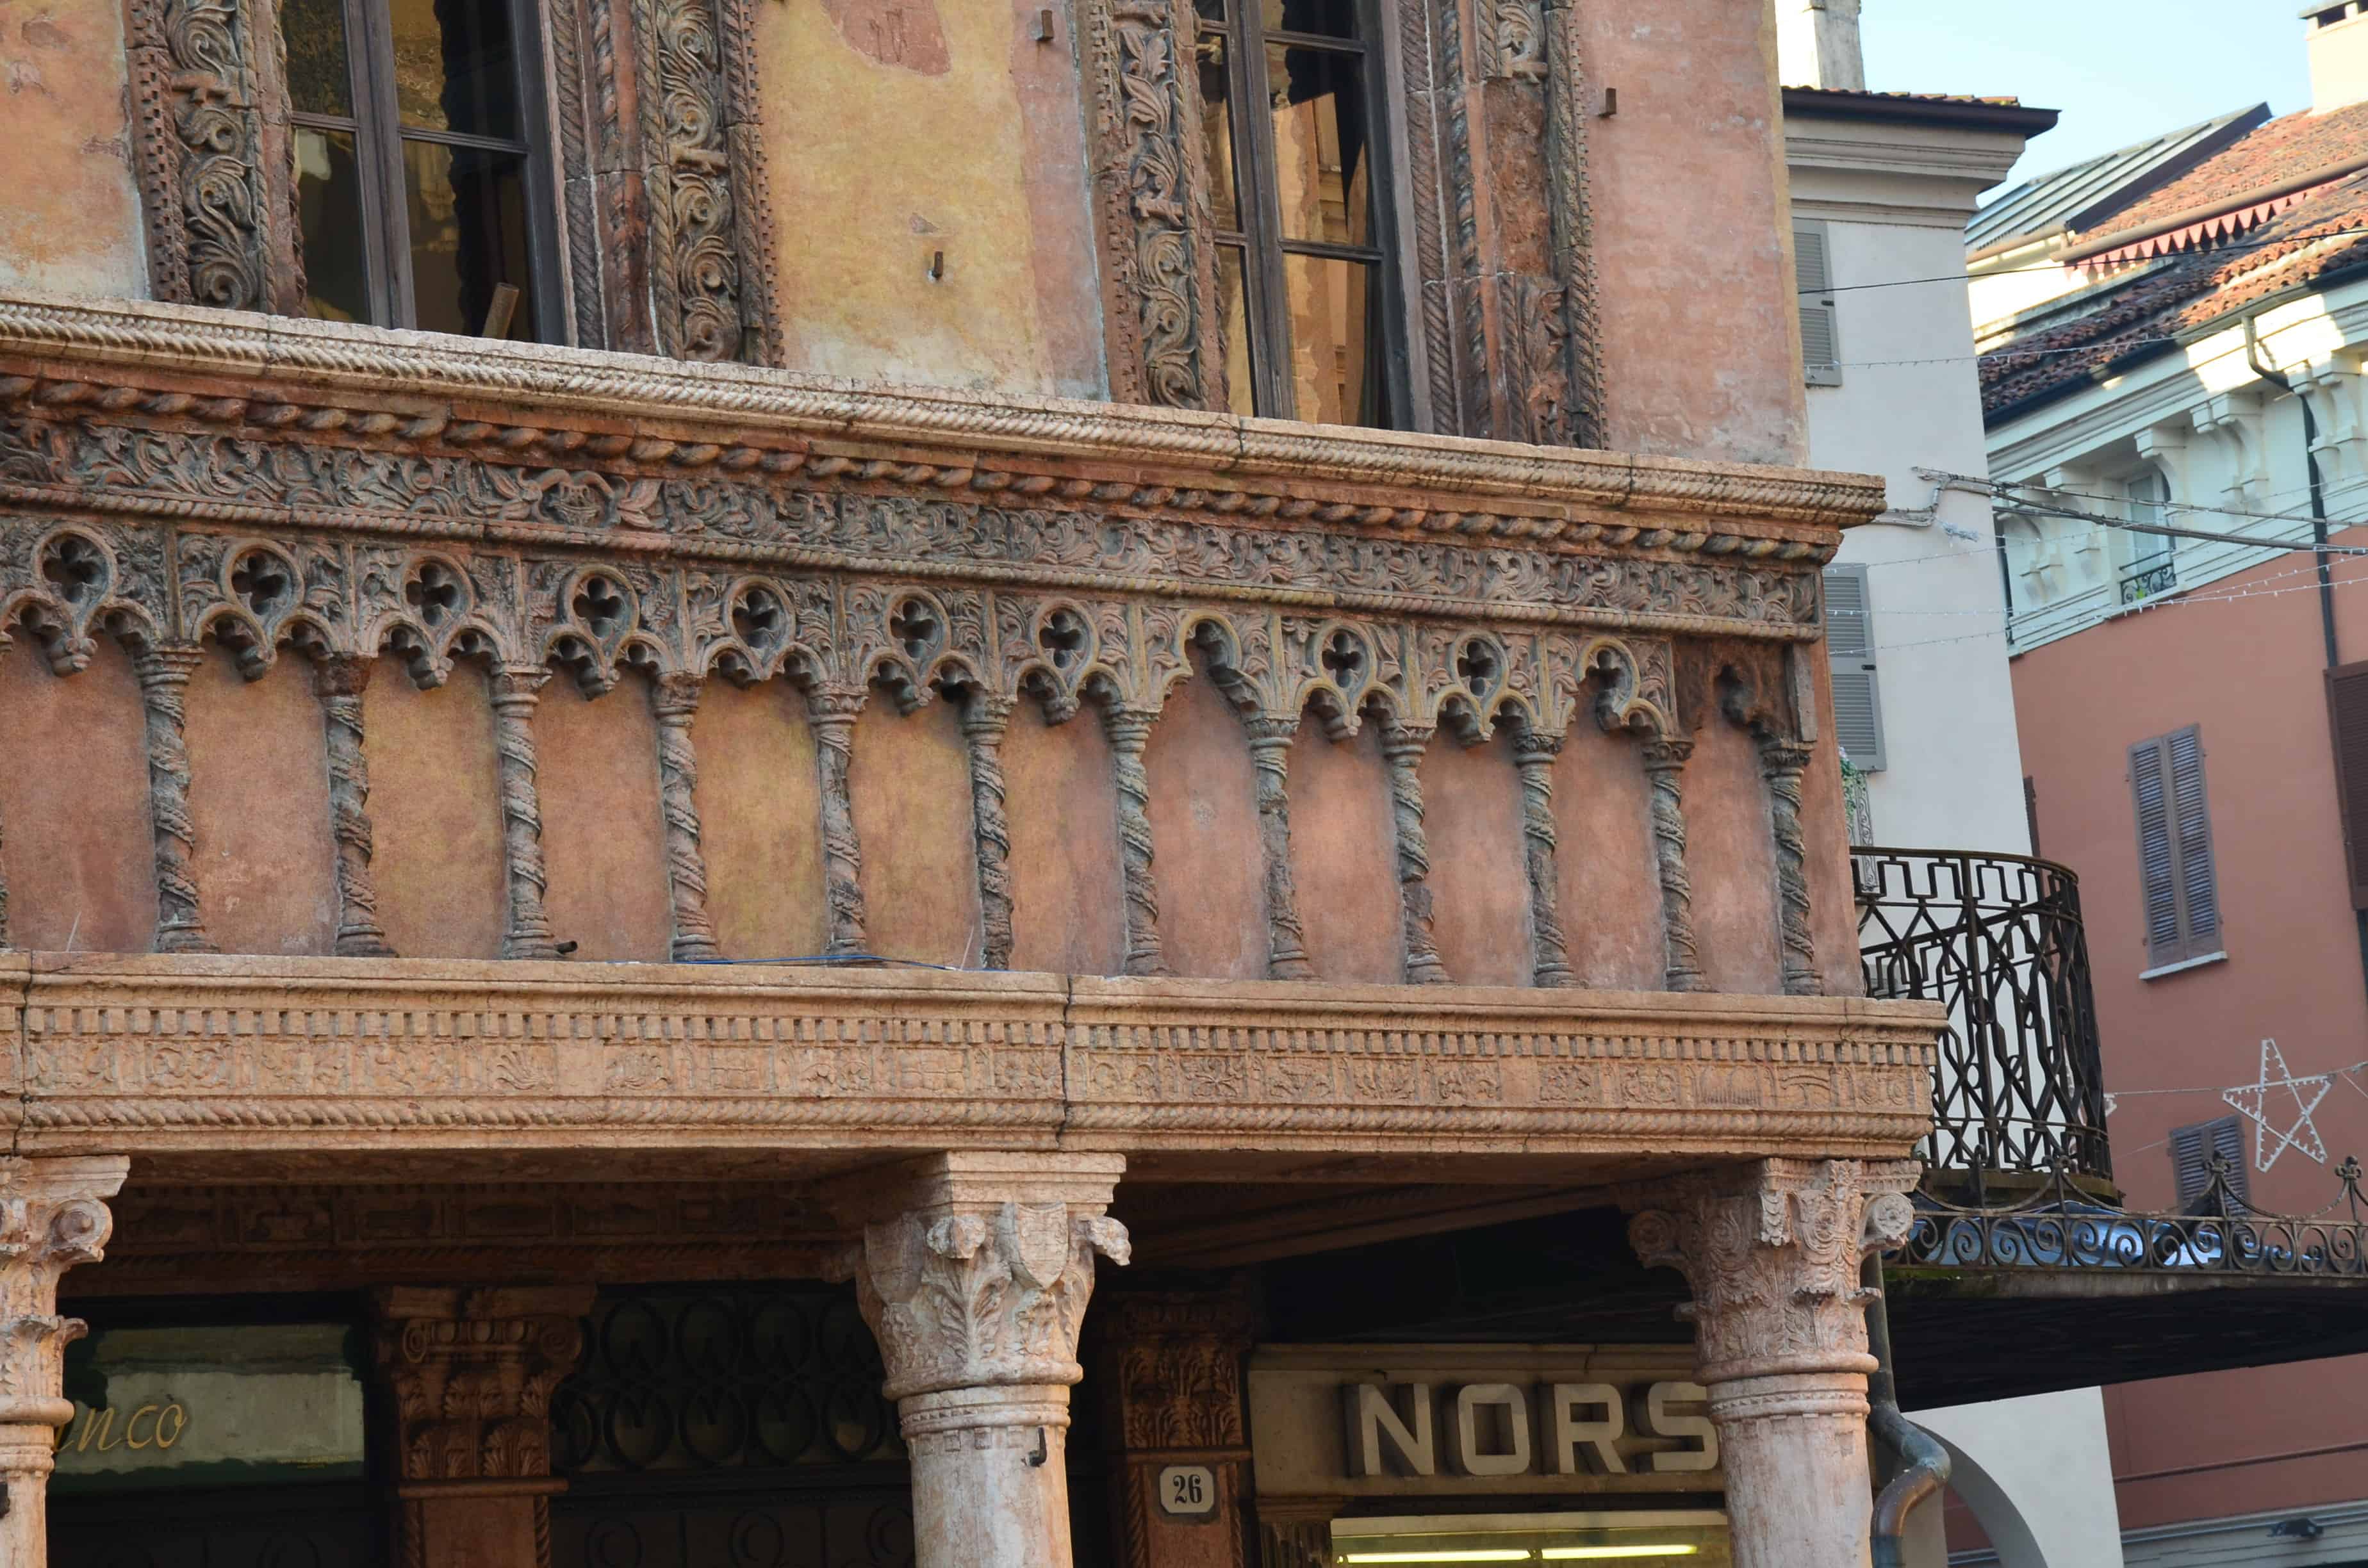 Merchant House in Mantua, Italy